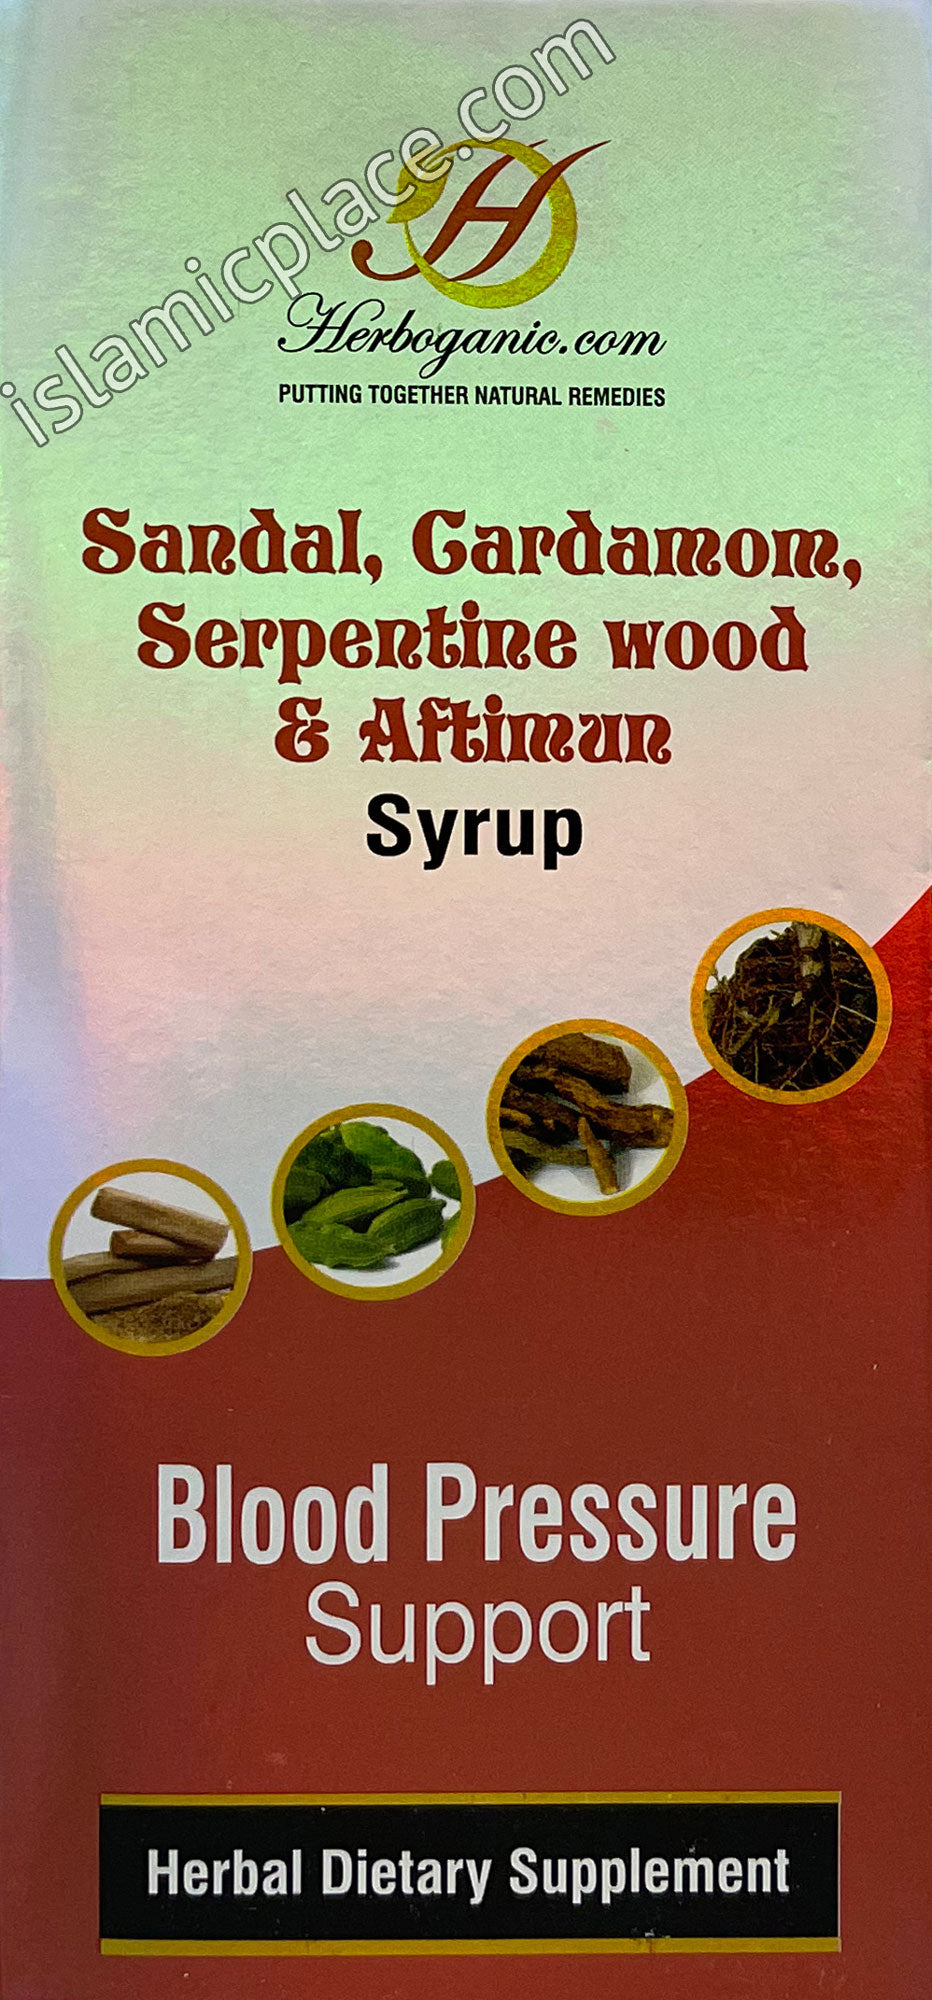 Blood Pressure Support Syrup - Sandal, Cardamom, Serpentine wood & Aftimun